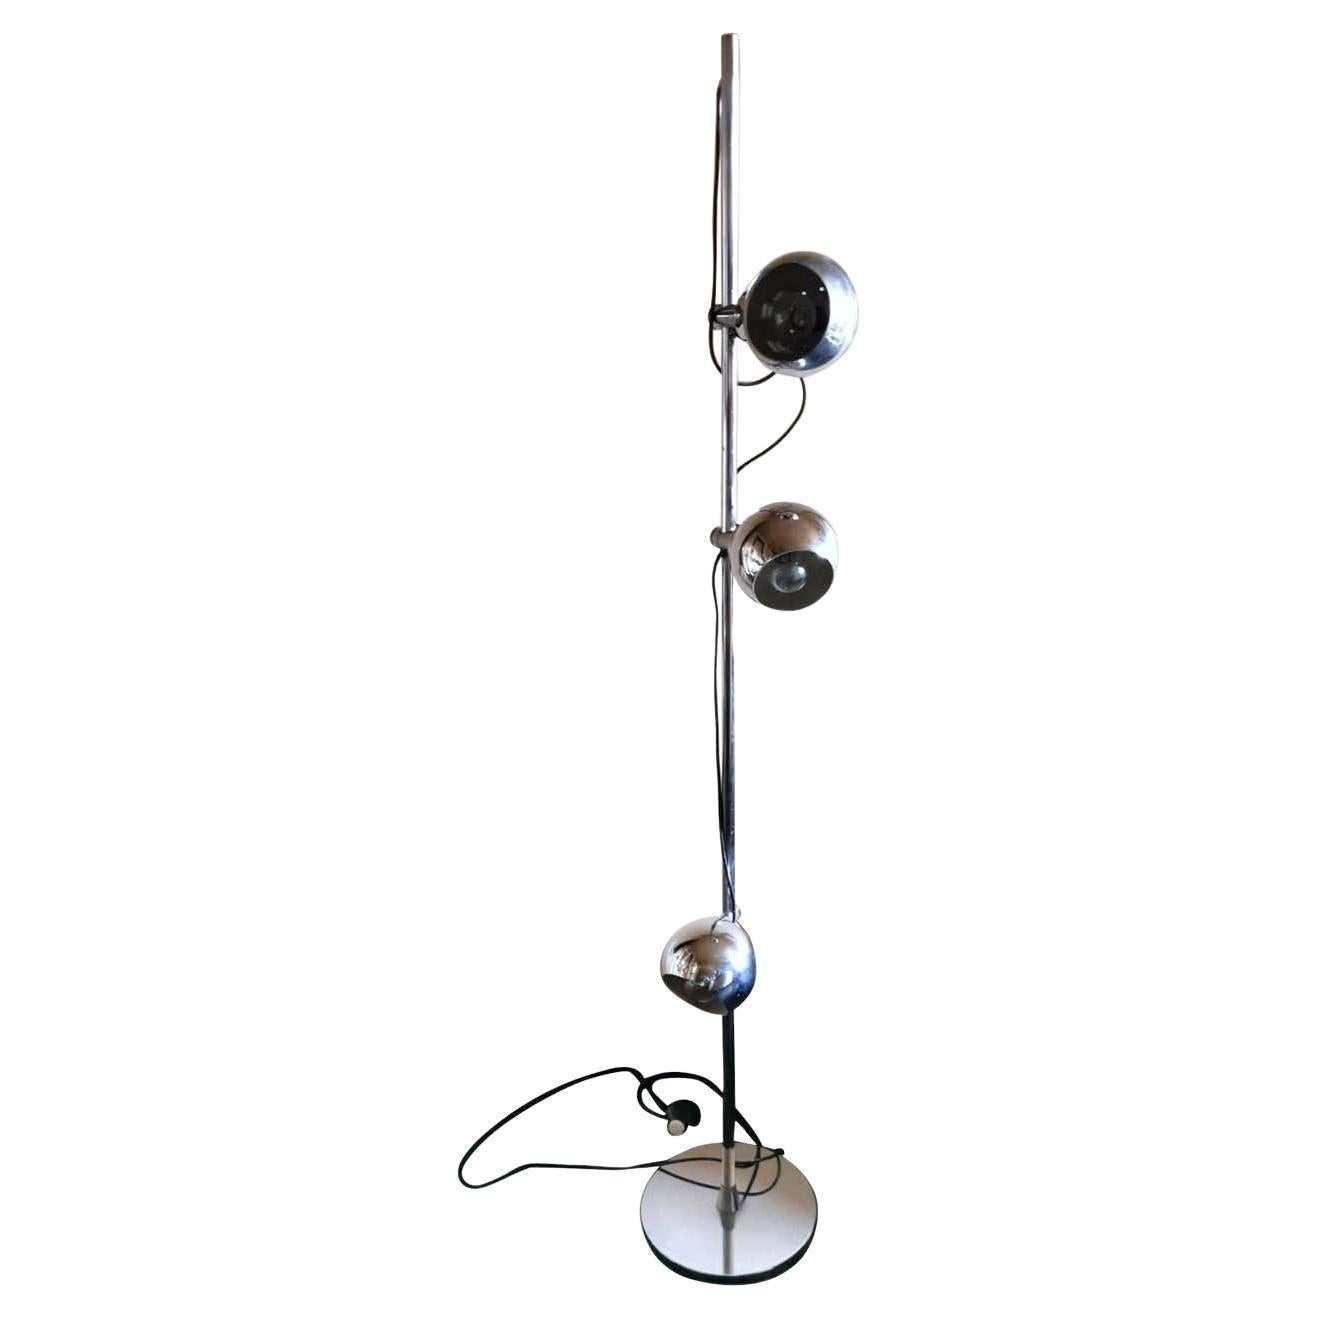 Goffredo Reggiani Italian Designer Floor Lamp Space Age Style in Chromed Metal For Sale